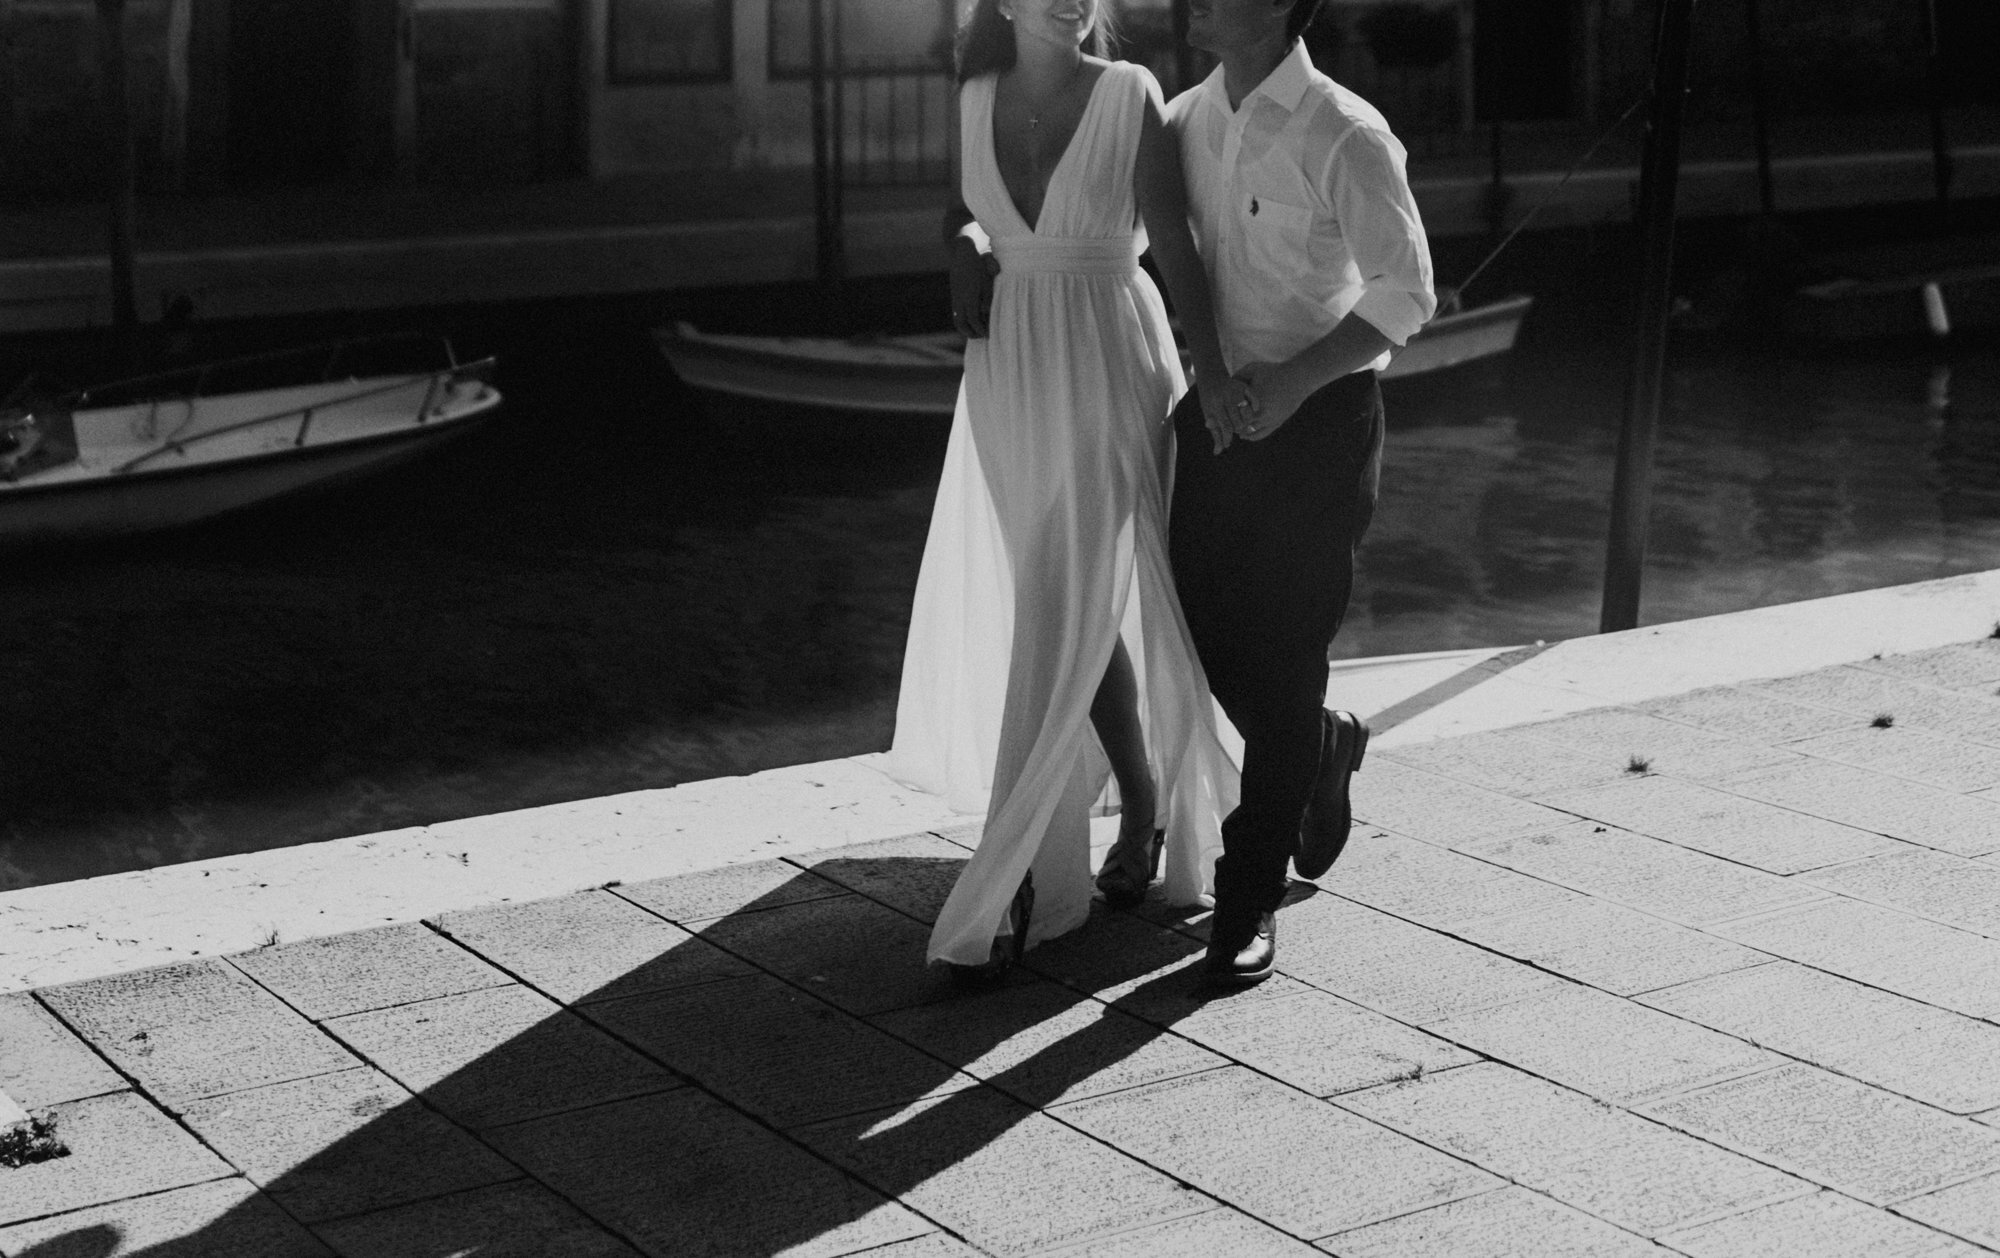 Venice Italy Romantic Elopement Photos